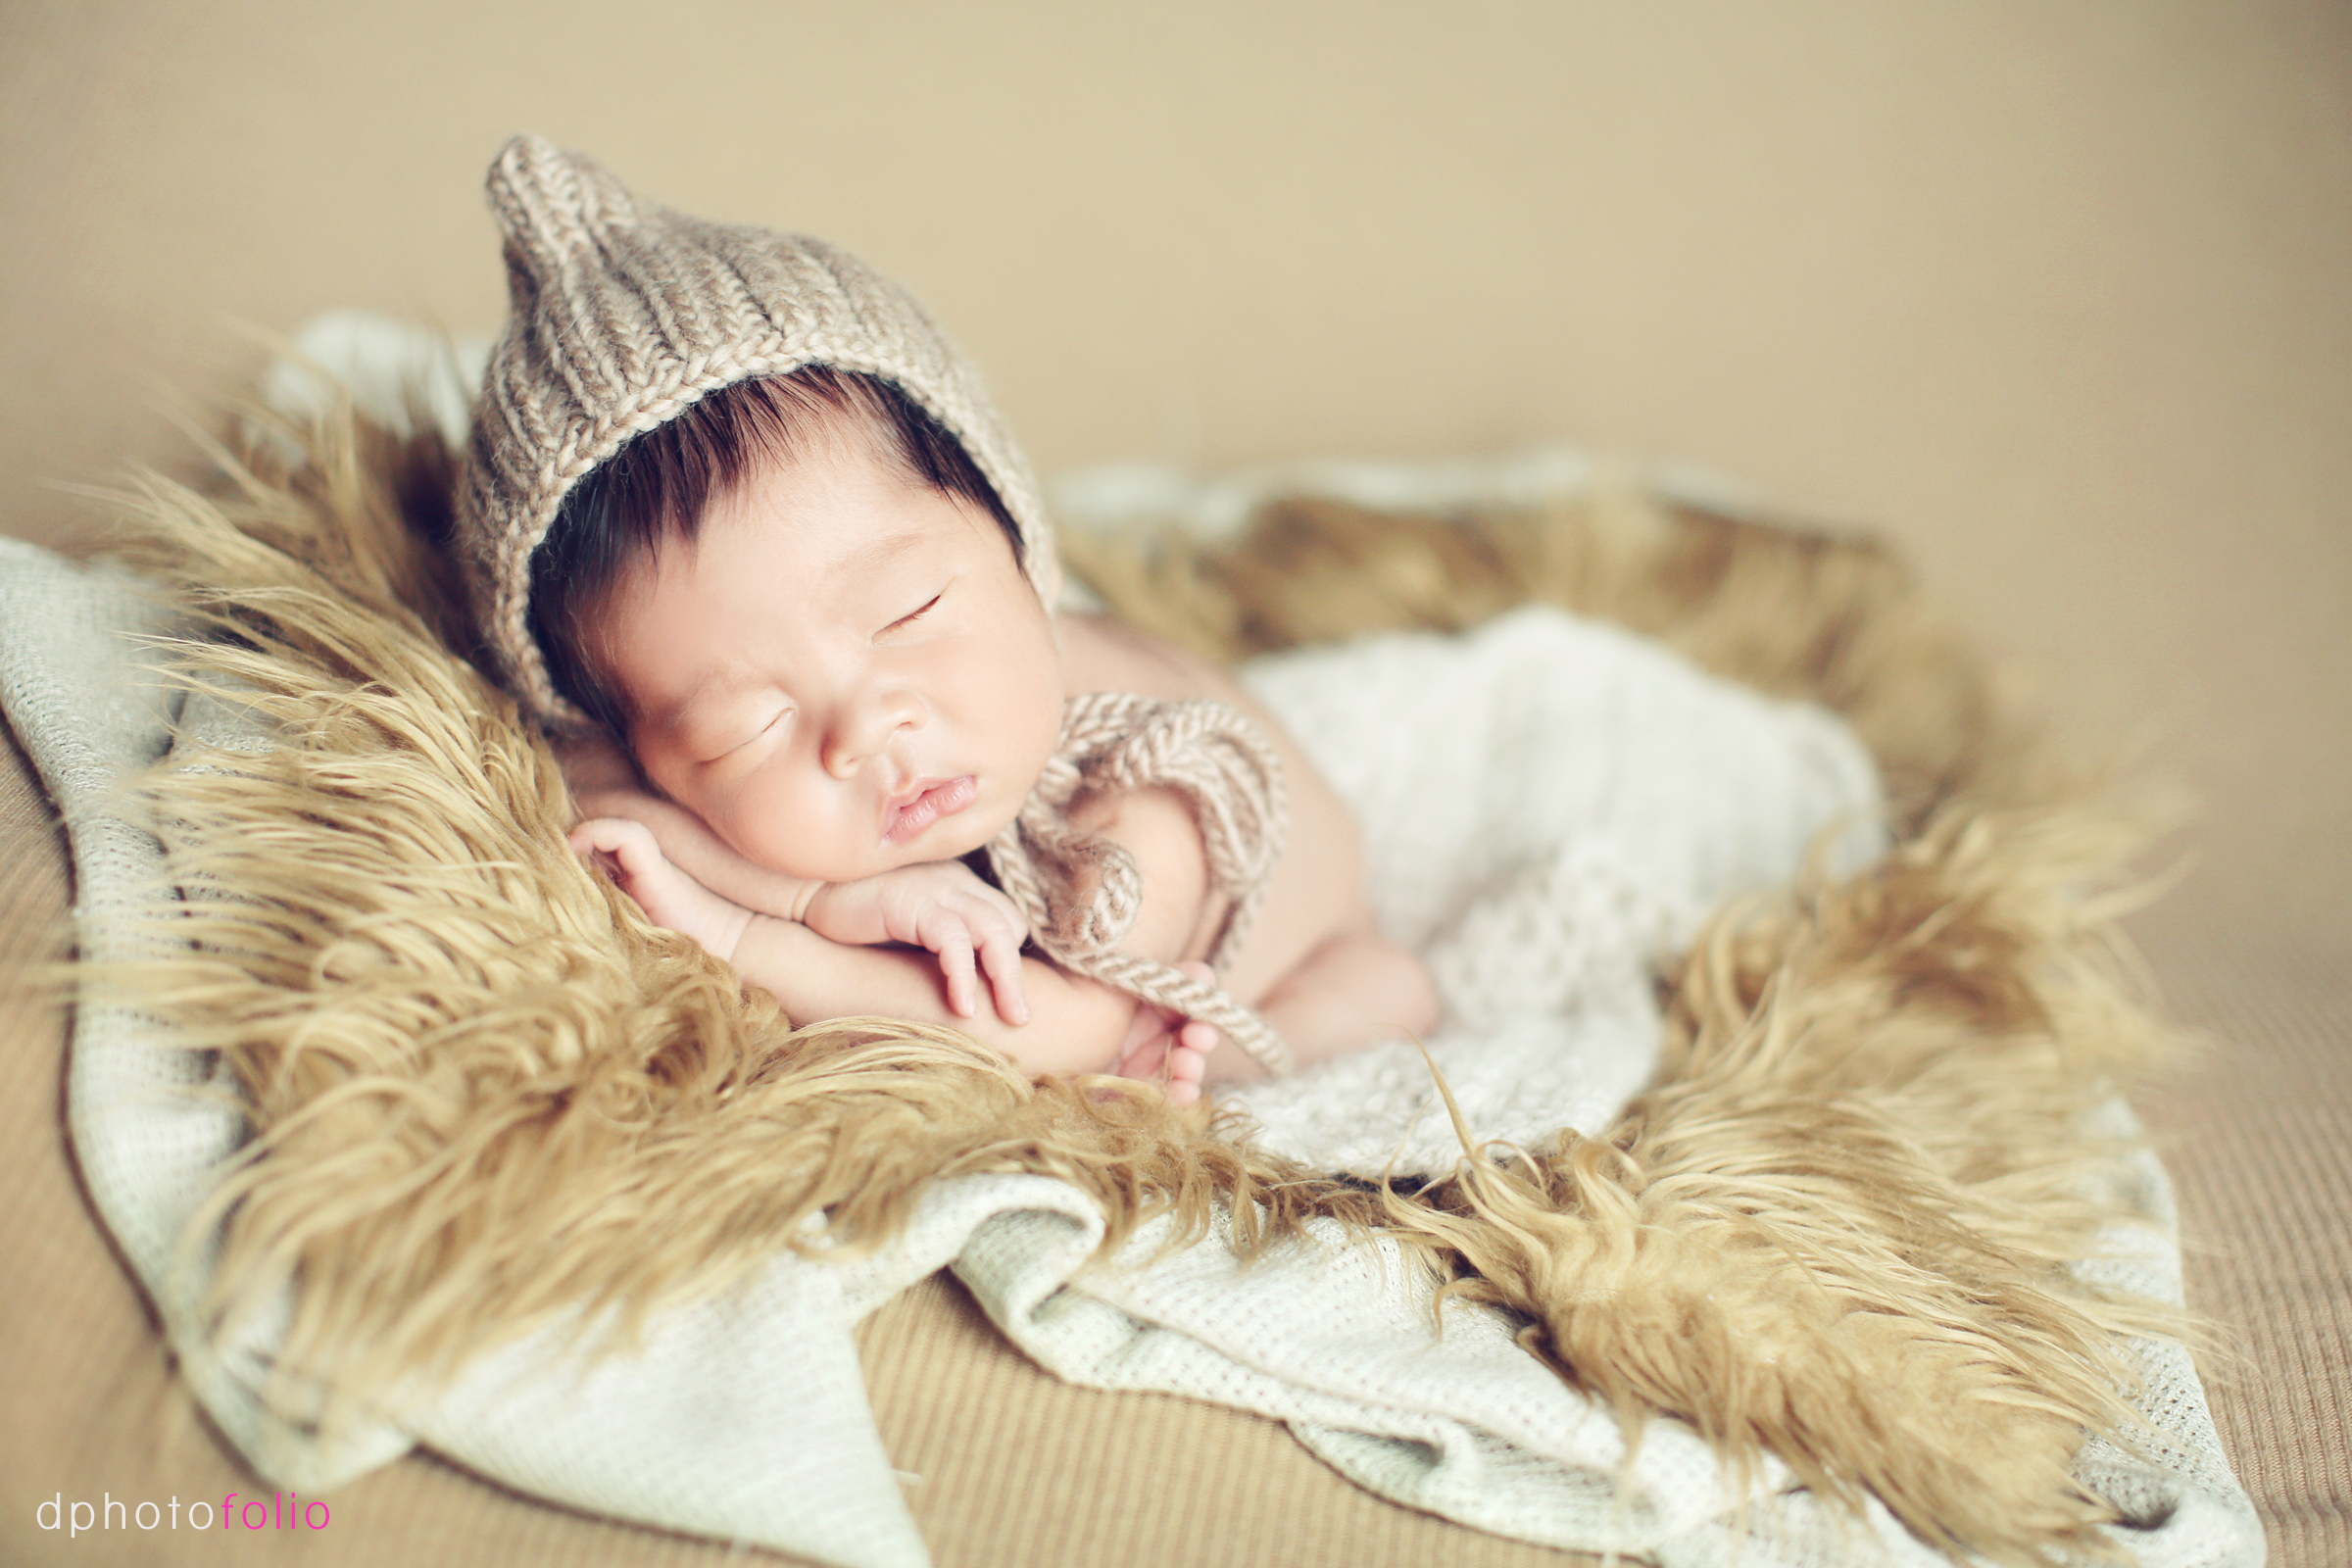 newborn-photography-1